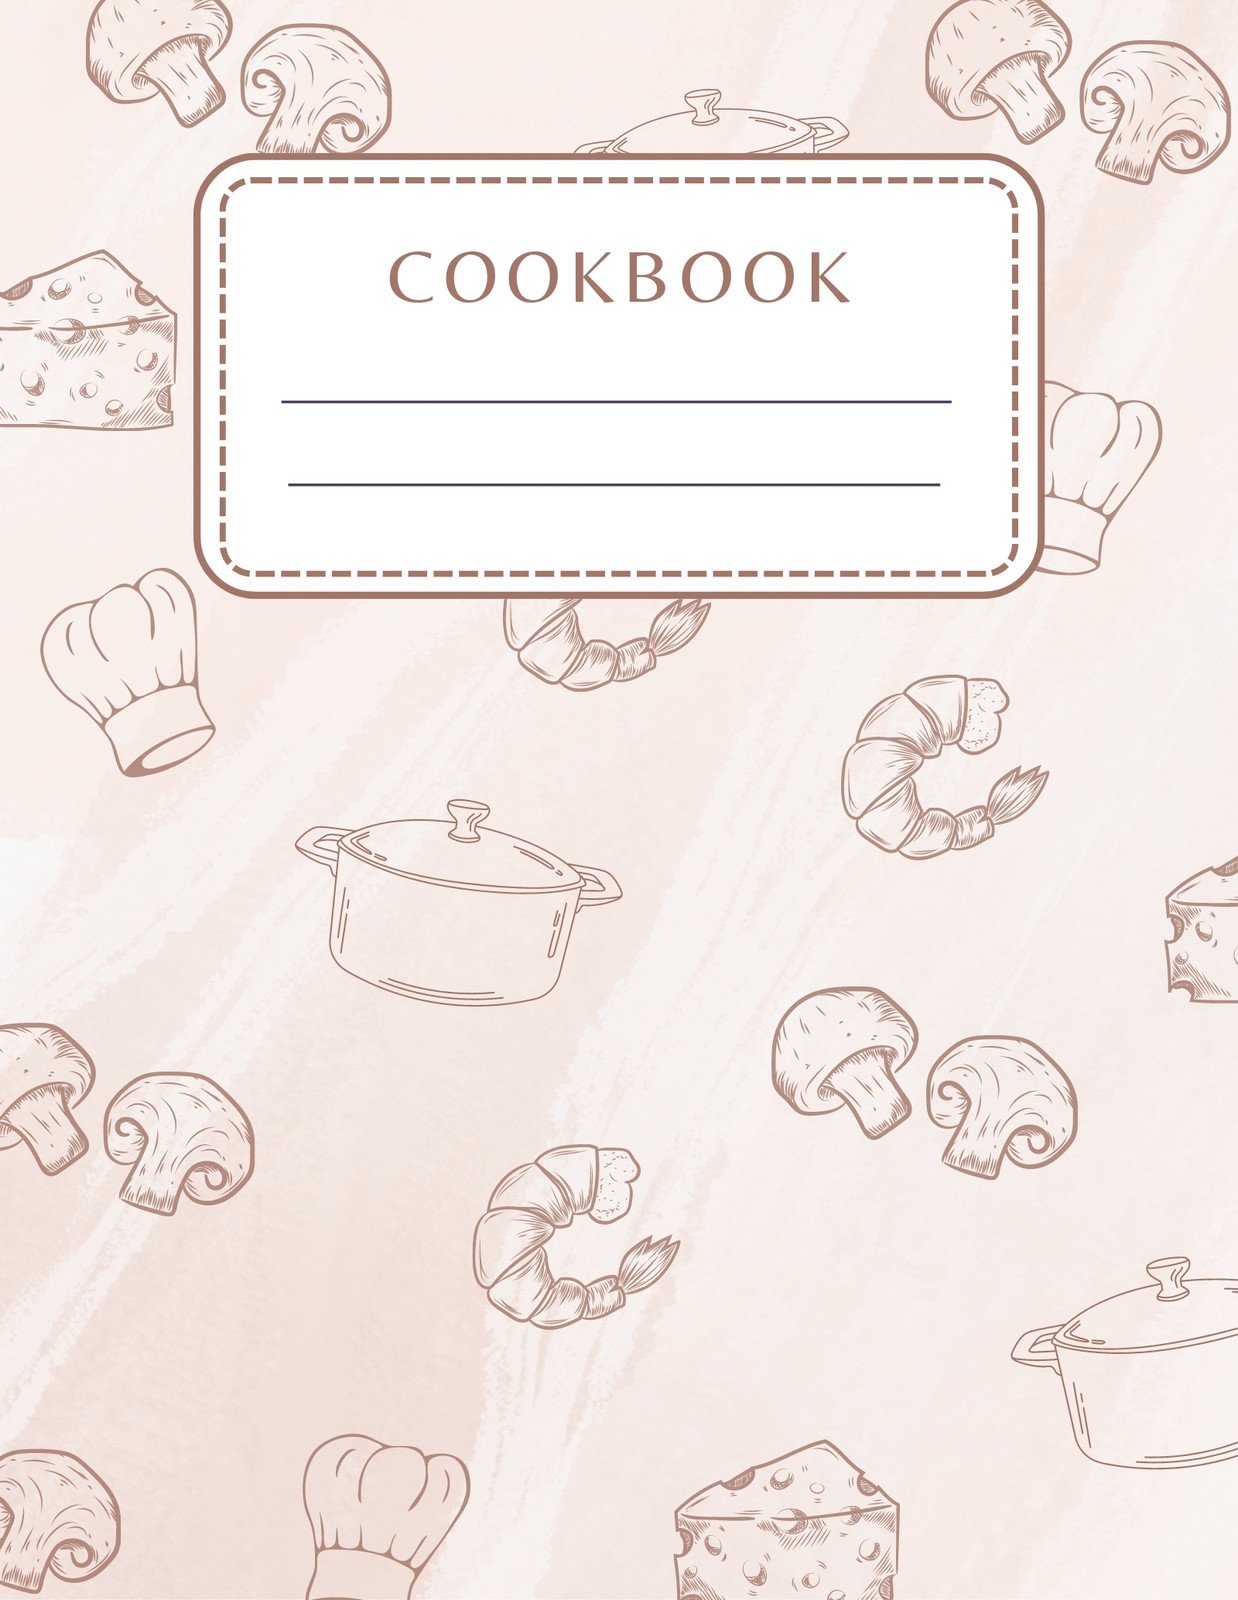 https://marketplace.canva.com/EAFrDOnQLHs/1/0/1238w/canva-beige-minimalistic-cookbook-digital-notebook-cover-x9mt4hJ3u0Y.jpg